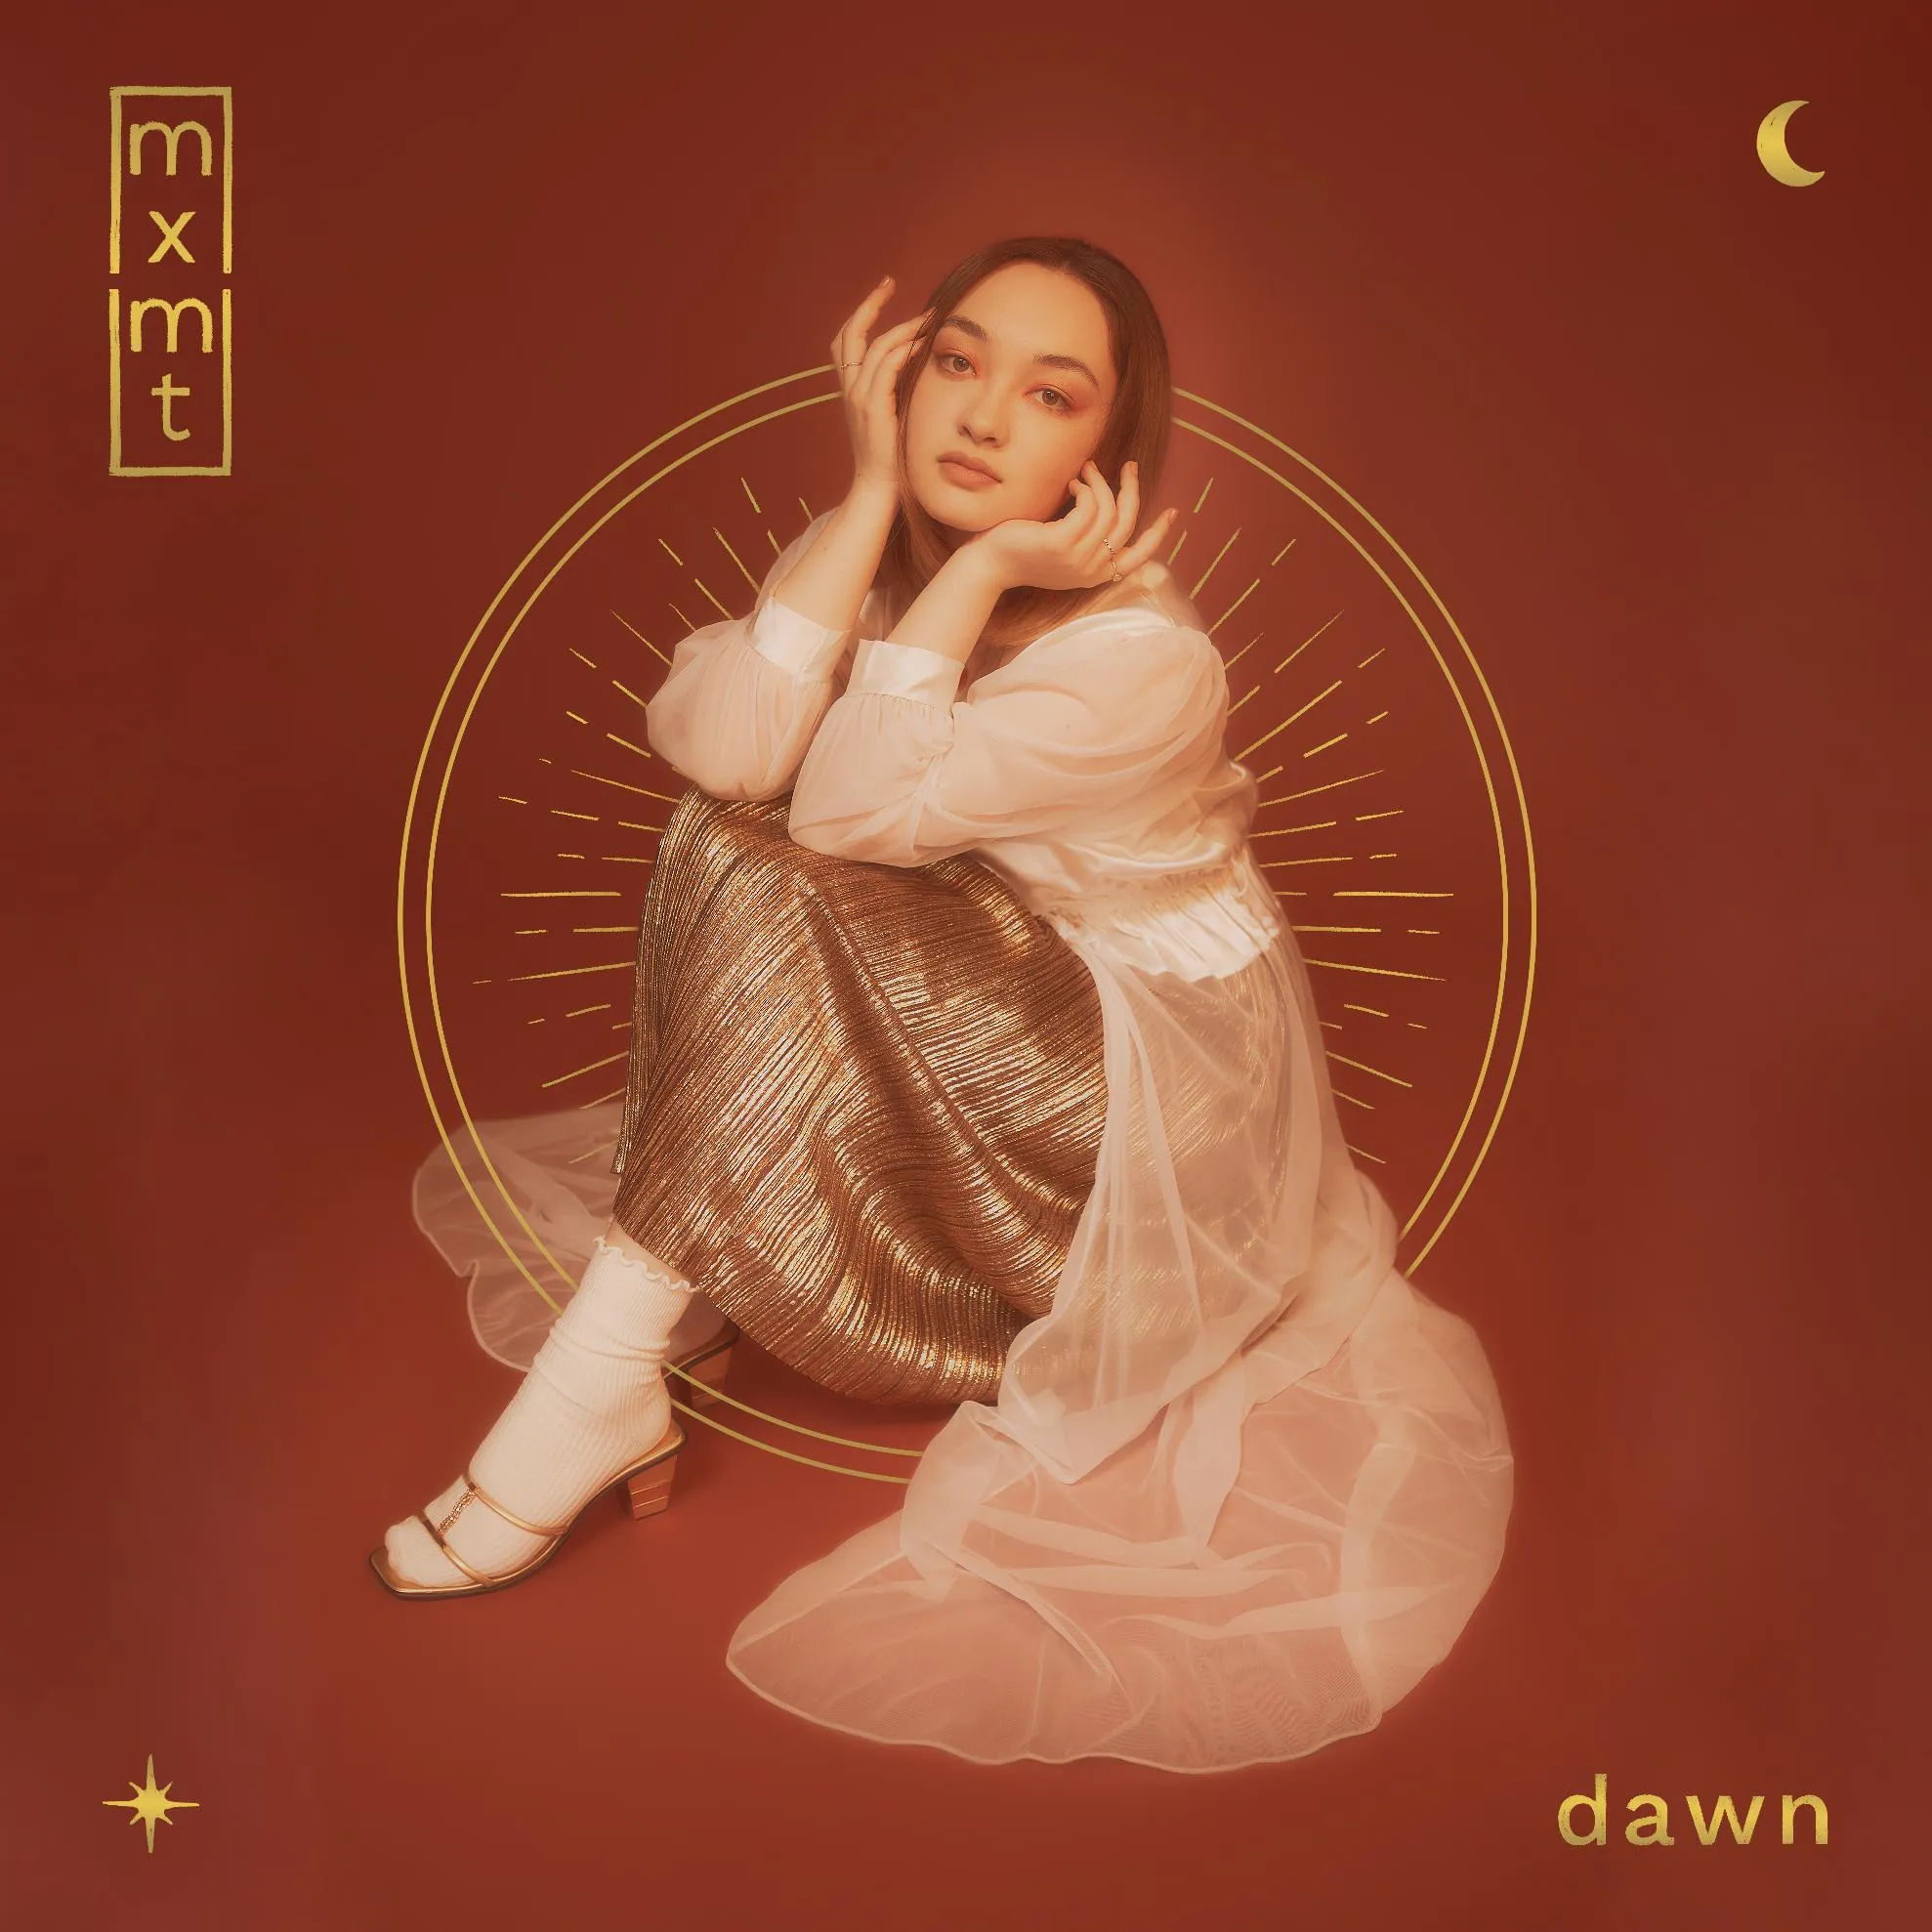 mxmtoon - Dawn artwork